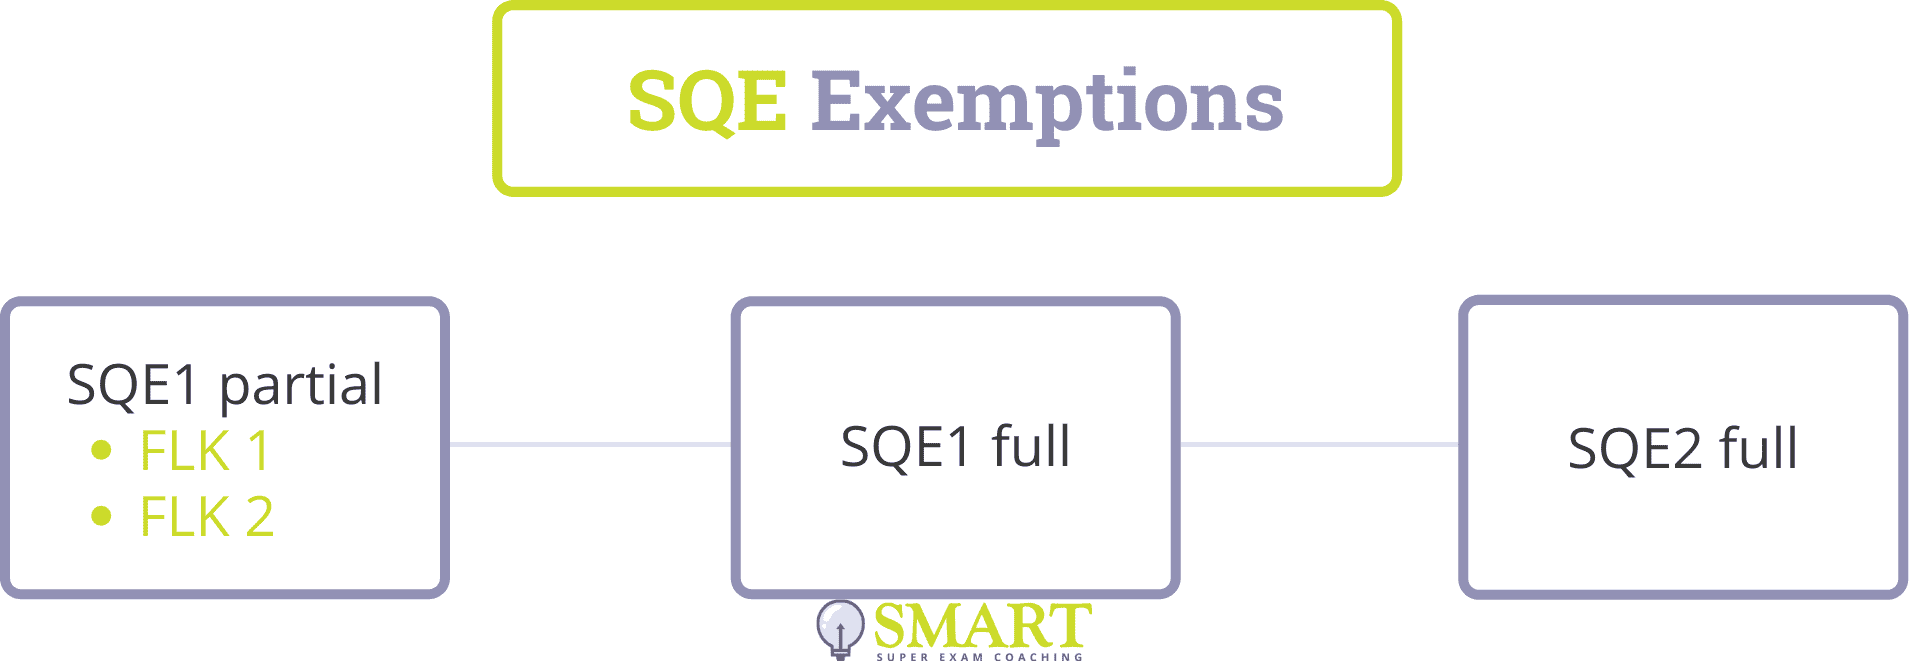 SQE exemptions